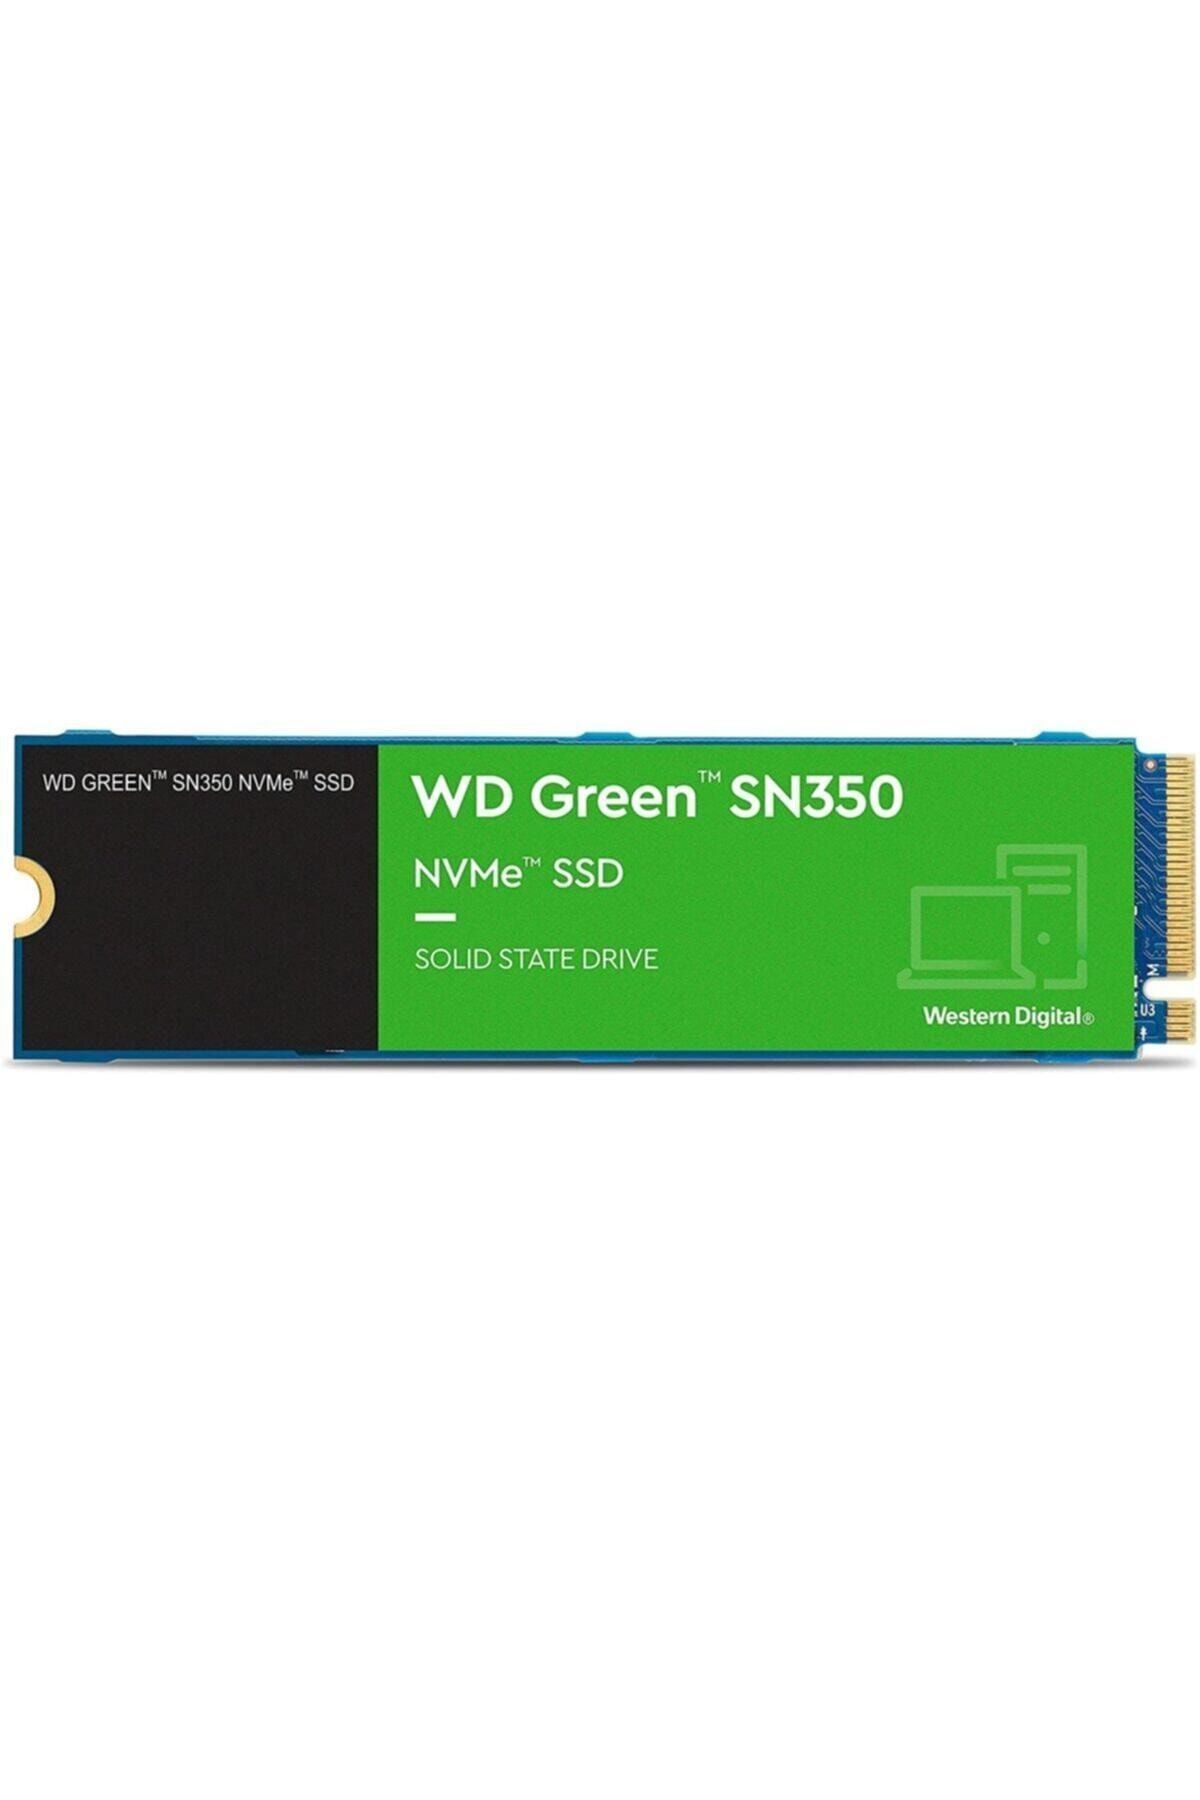 WESTERN DIGITAL Wd Green Sn350 Wds480g2g0c 480 Gb 2400/1650 Mb/s M.2 Nvme Ssd